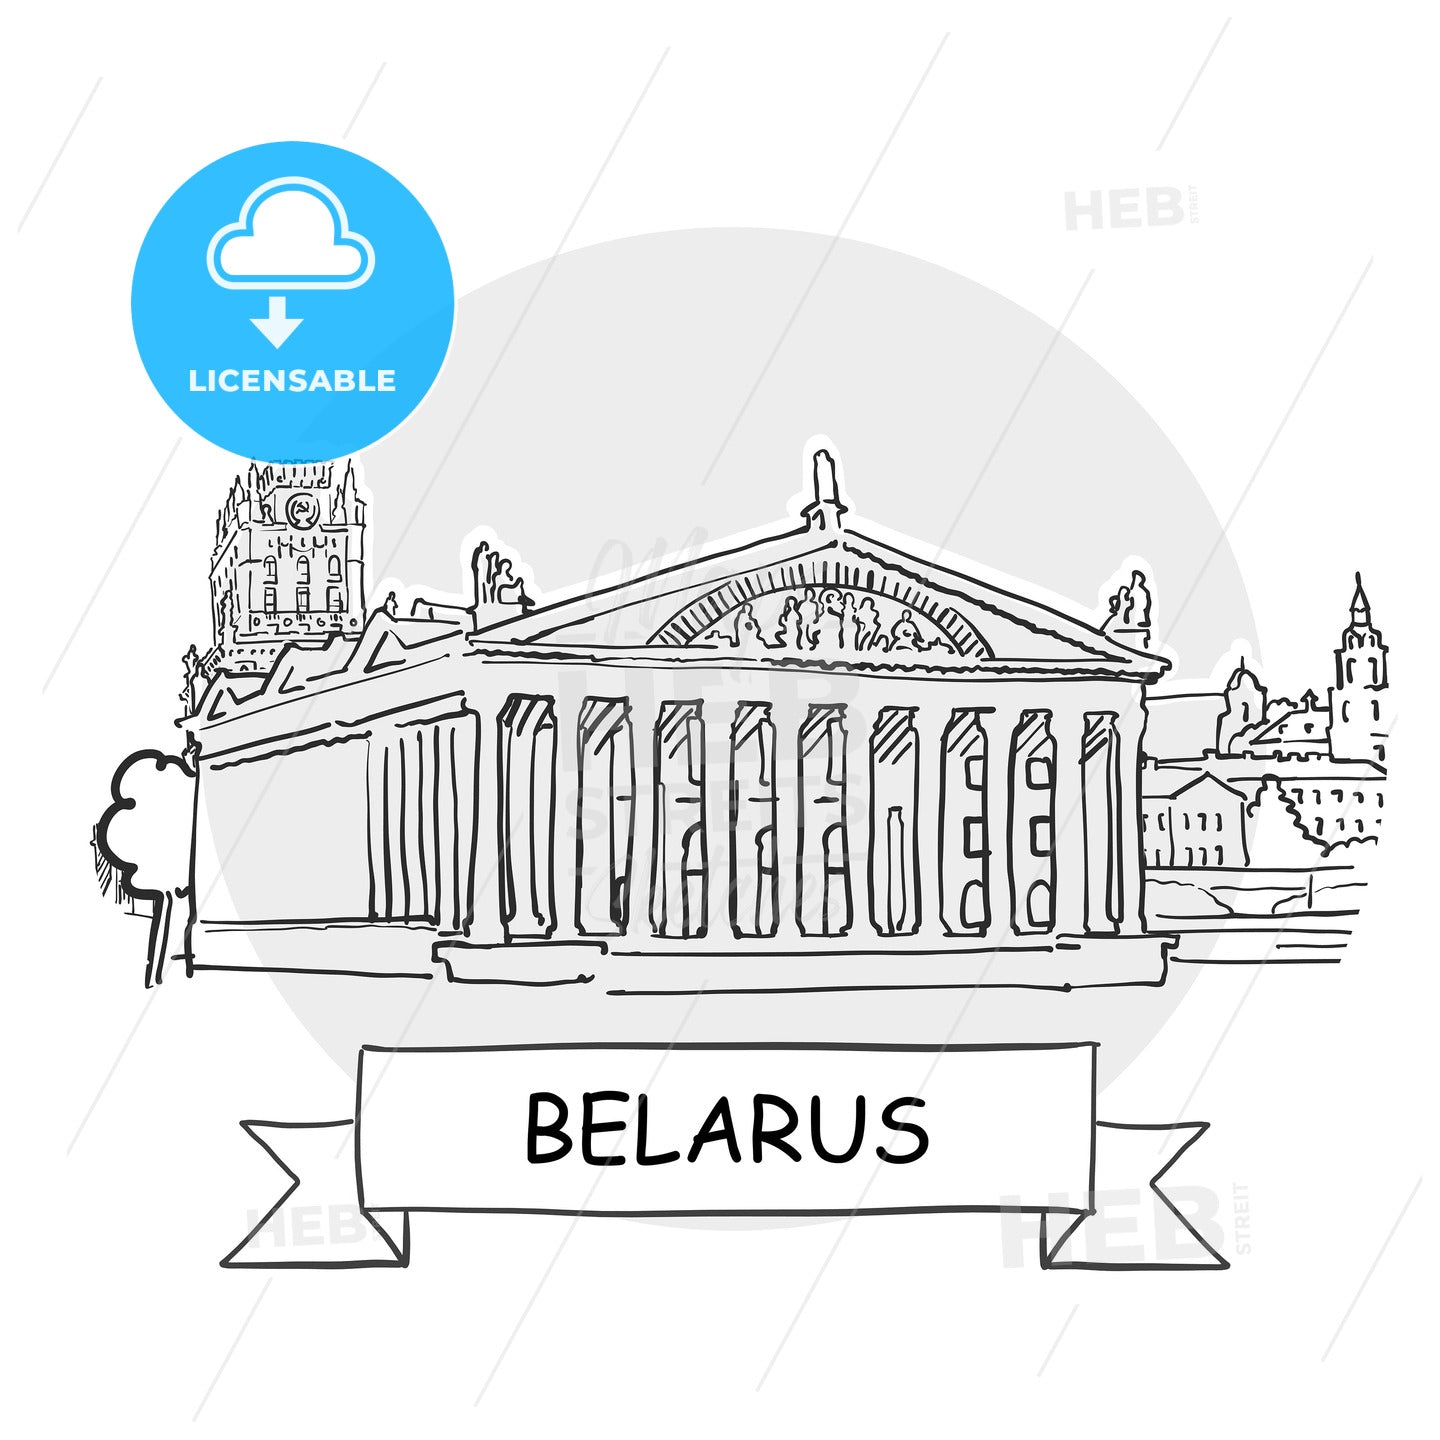 Belarus hand-drawn urban vector sign – instant download